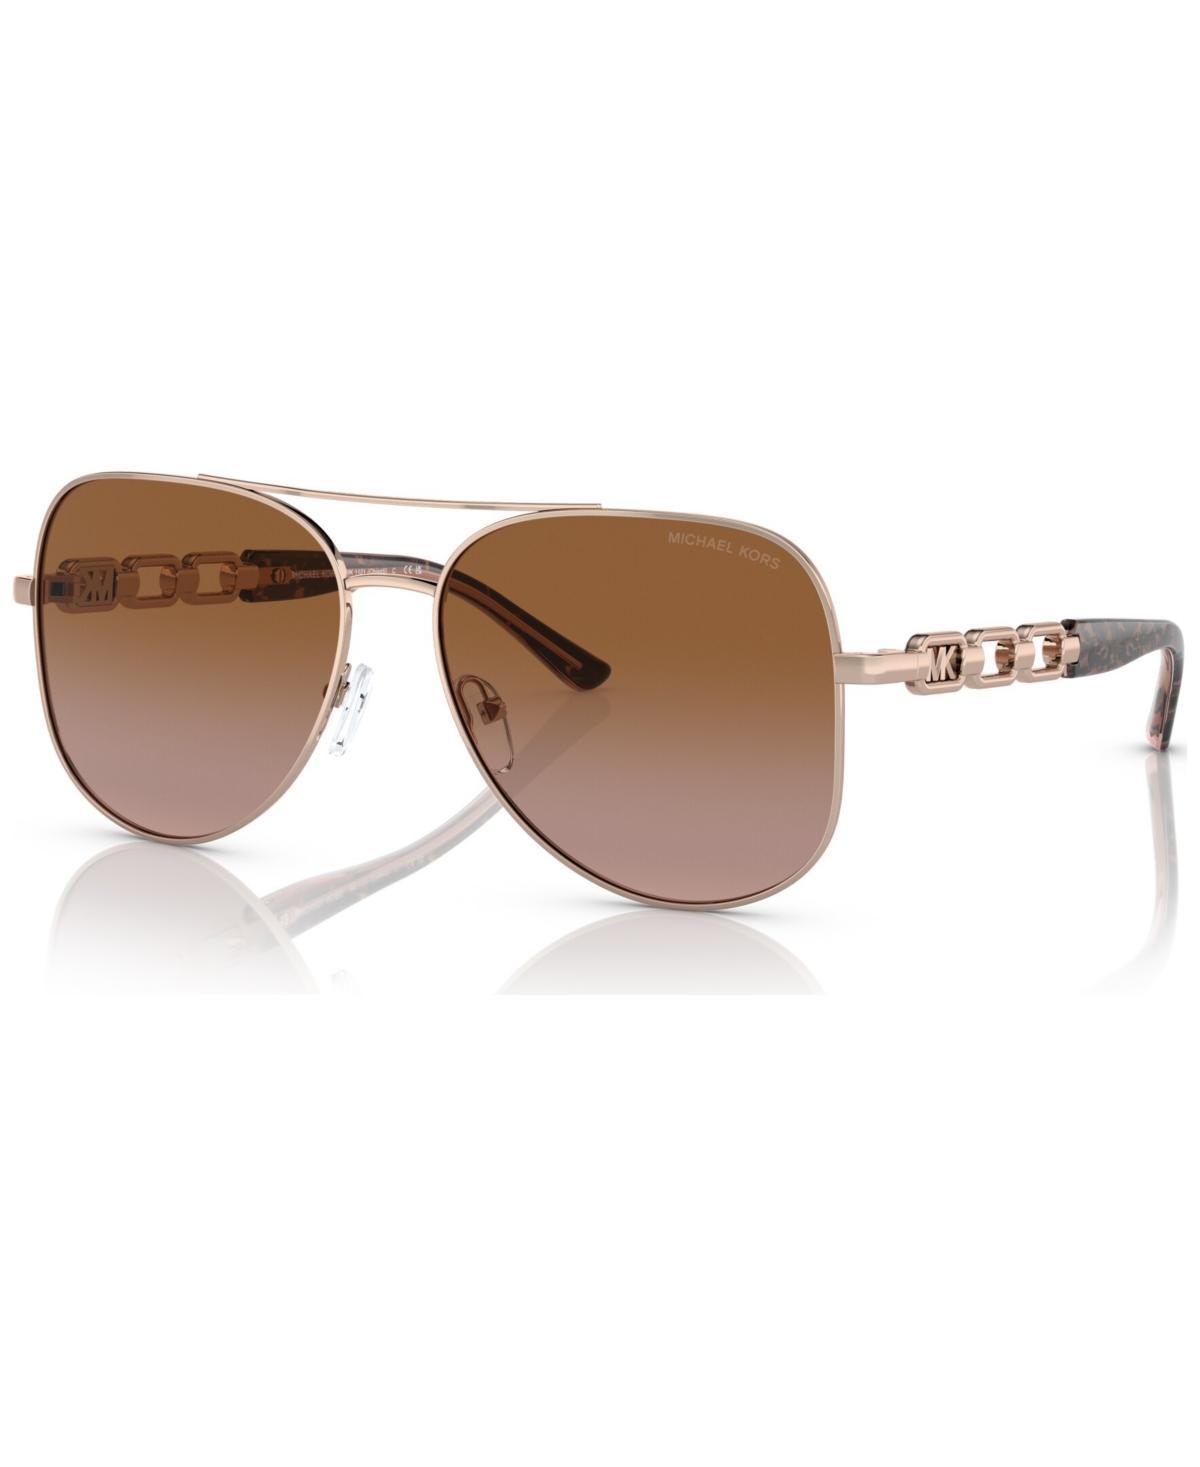 Michael Kors Women's Mk1121 Chianti Sunglasses, Pink, Large Product Image